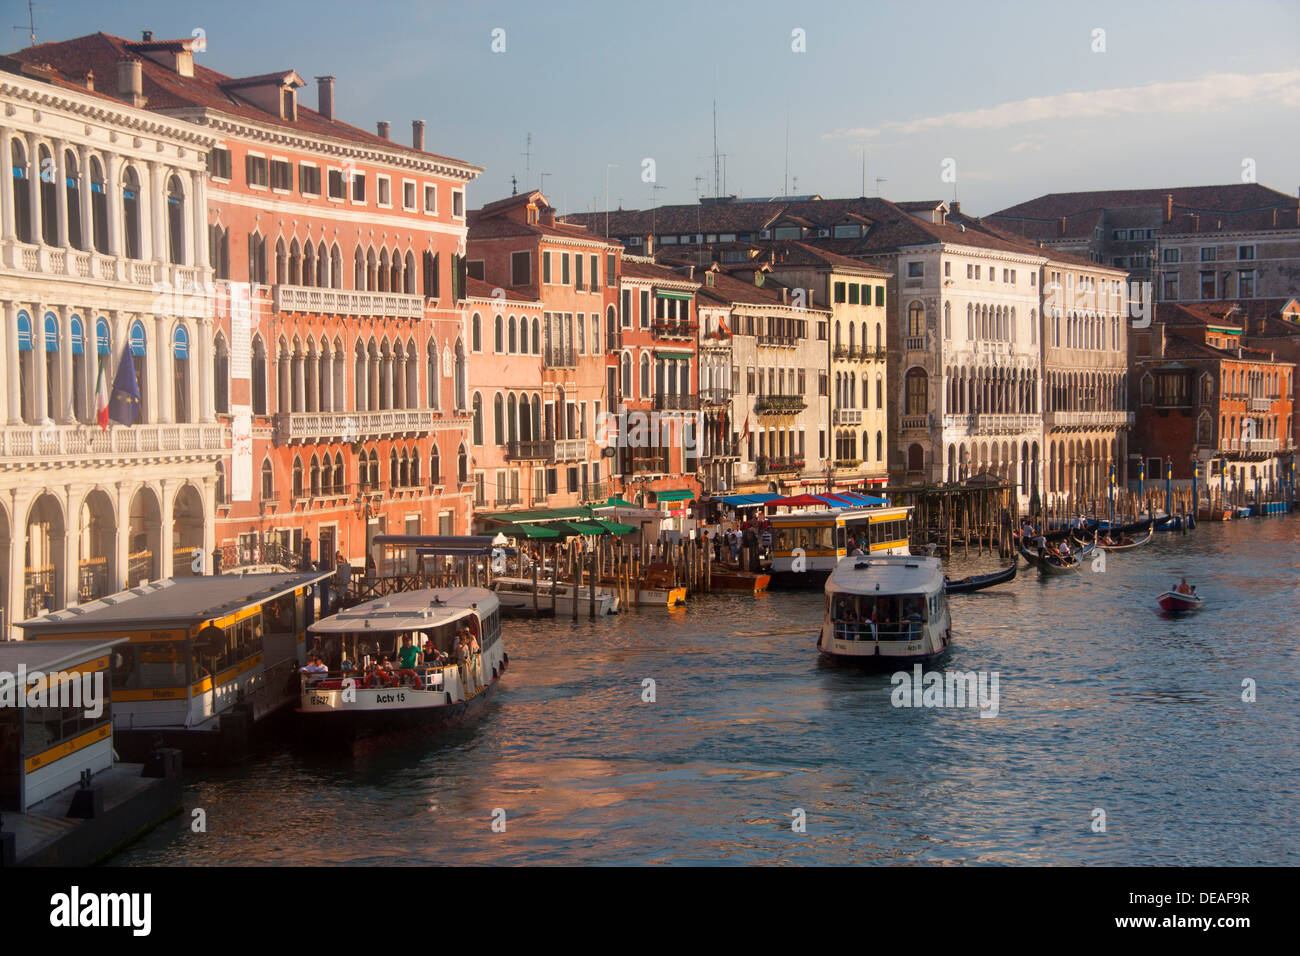 Vaporeto boats at the Grand Channel in Venice Stock Photo - Alamy